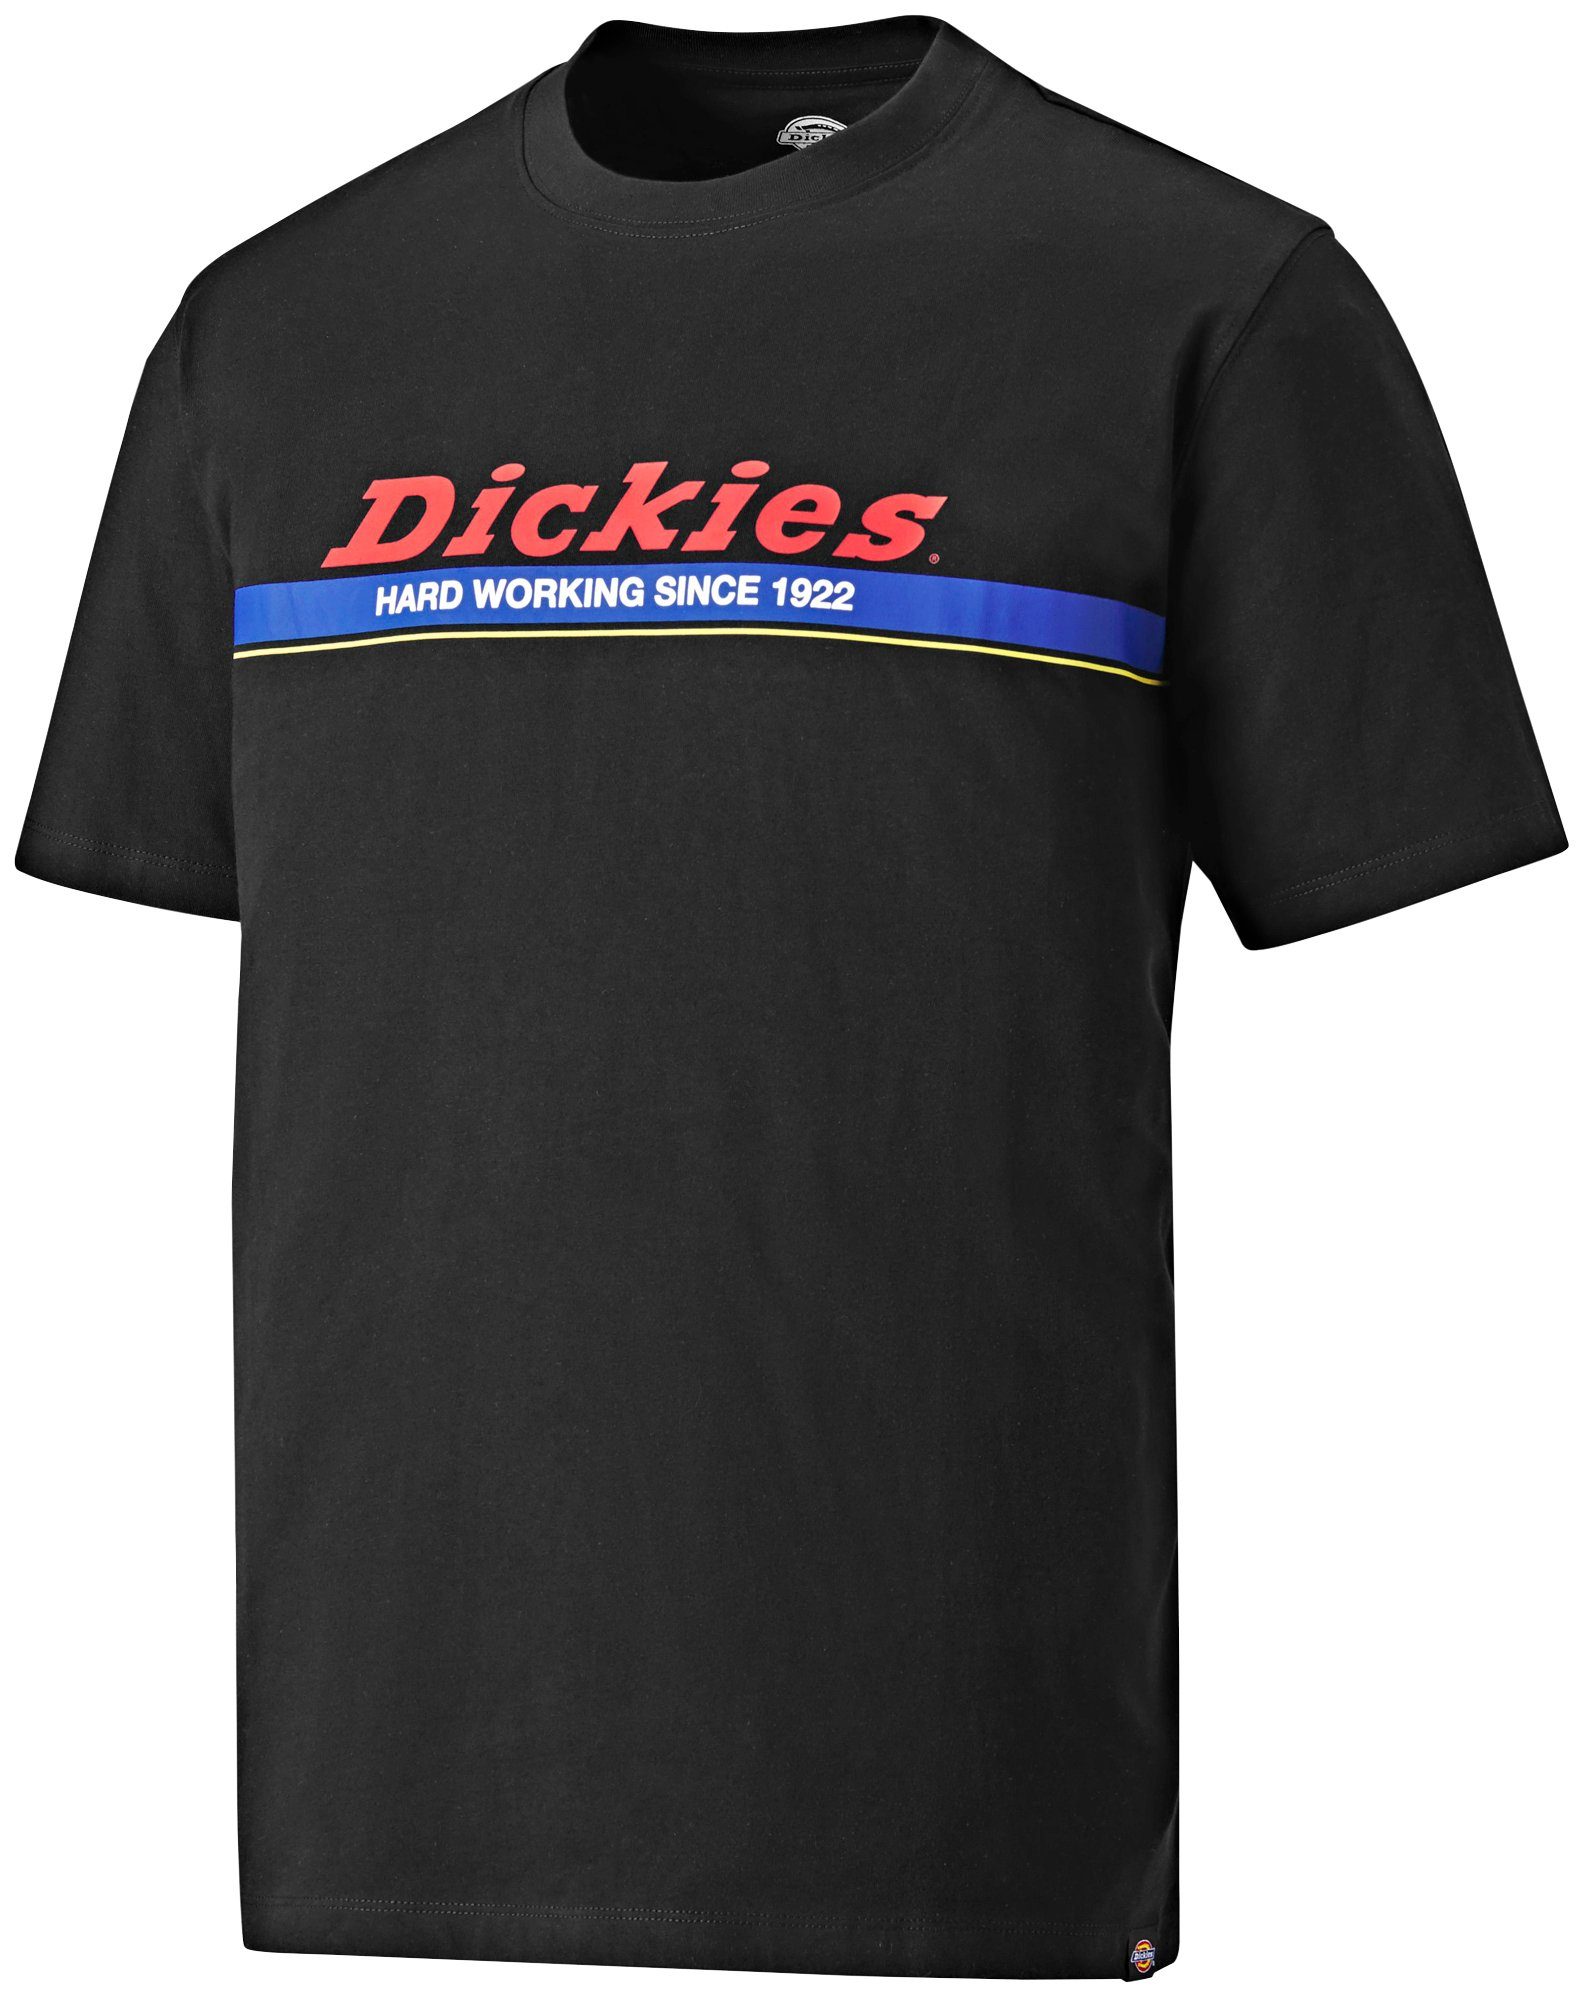 4XL S - Dickies Gr. Newton T-Shirt